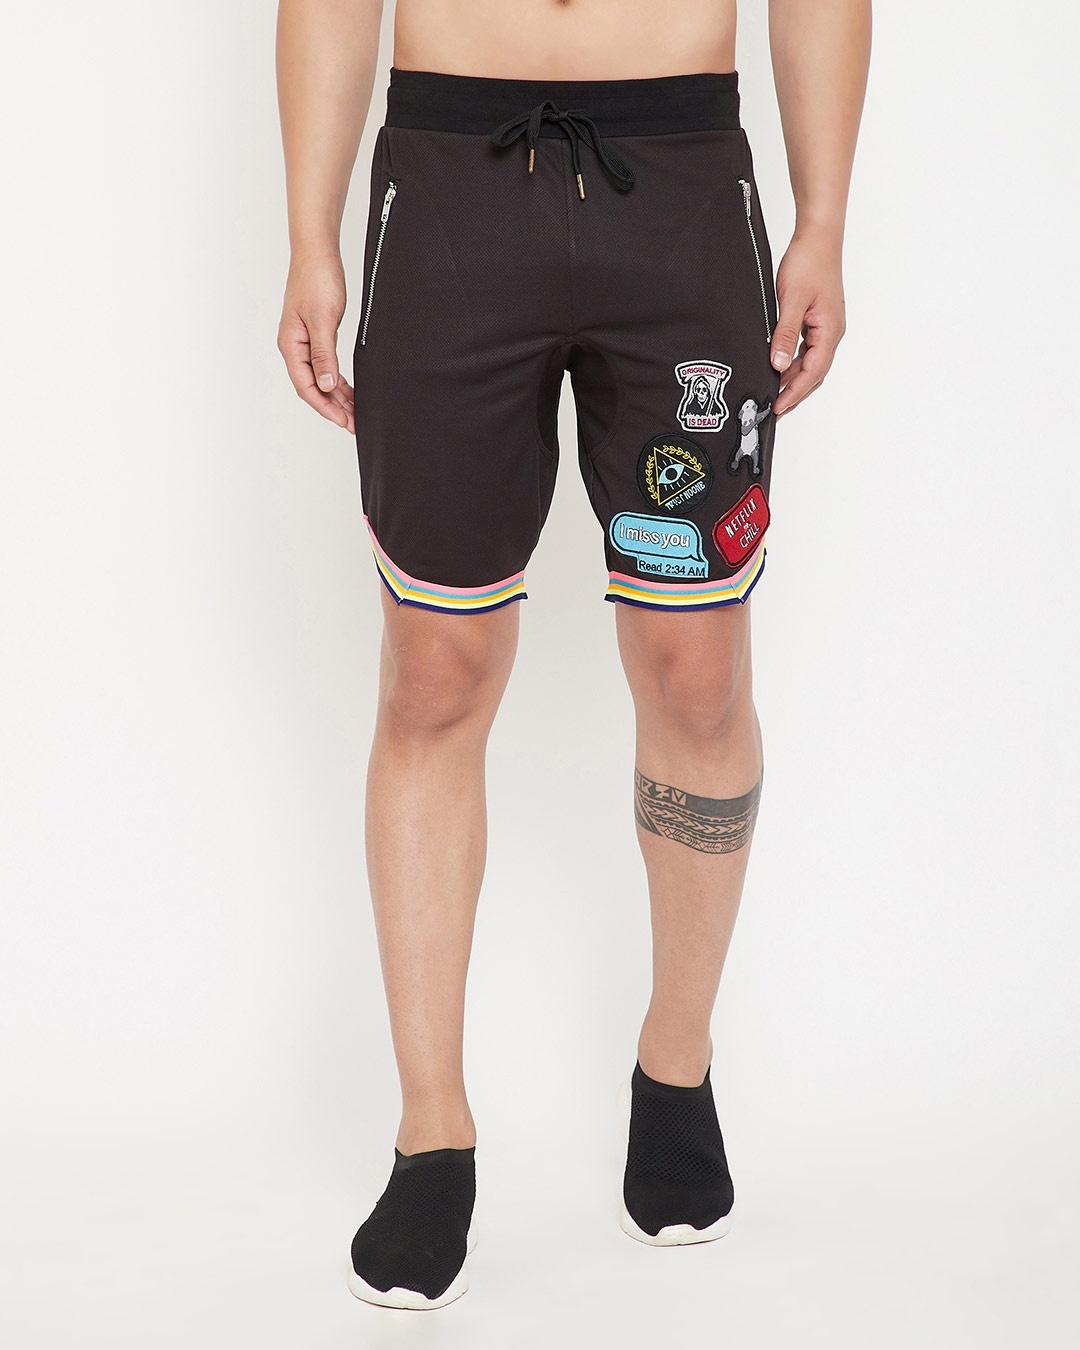 Shop Black Mesh Tattooed Rainbow Taped Shorts-Front